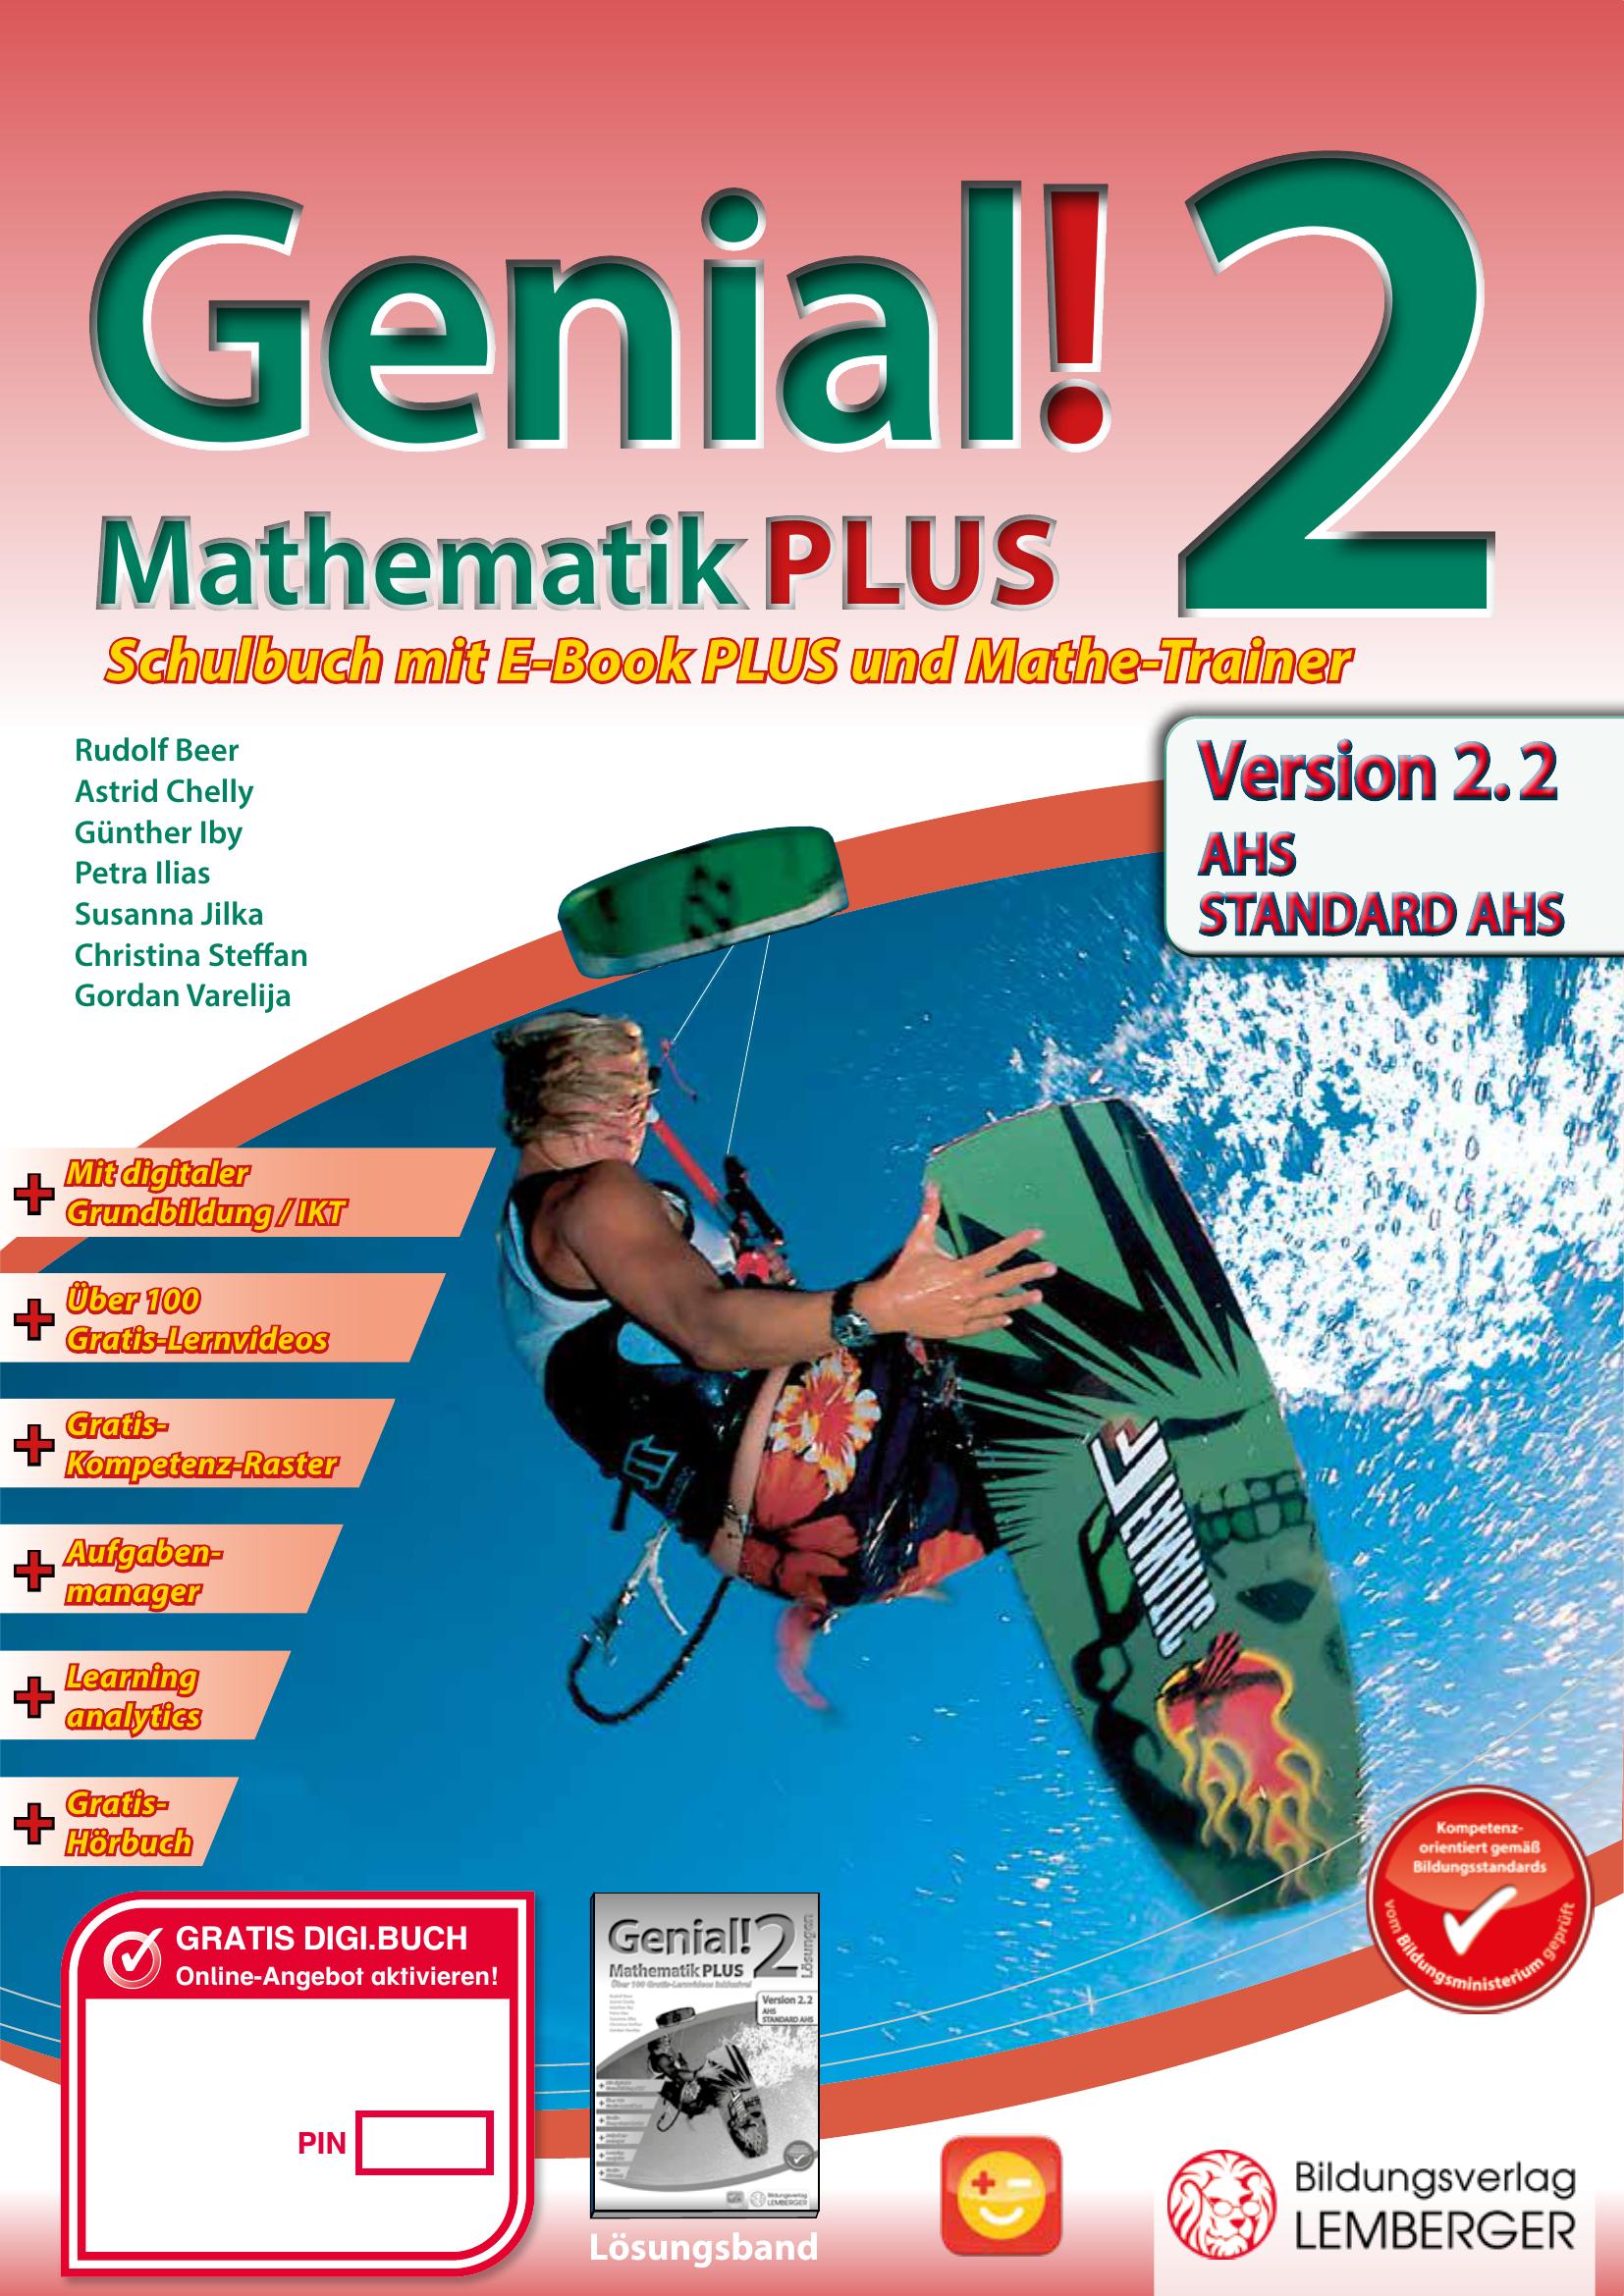 Genial! Mathematik PLUS 2 IKT v2.2 PLUS-Lizenz mit Genial! Mathe-Trainer